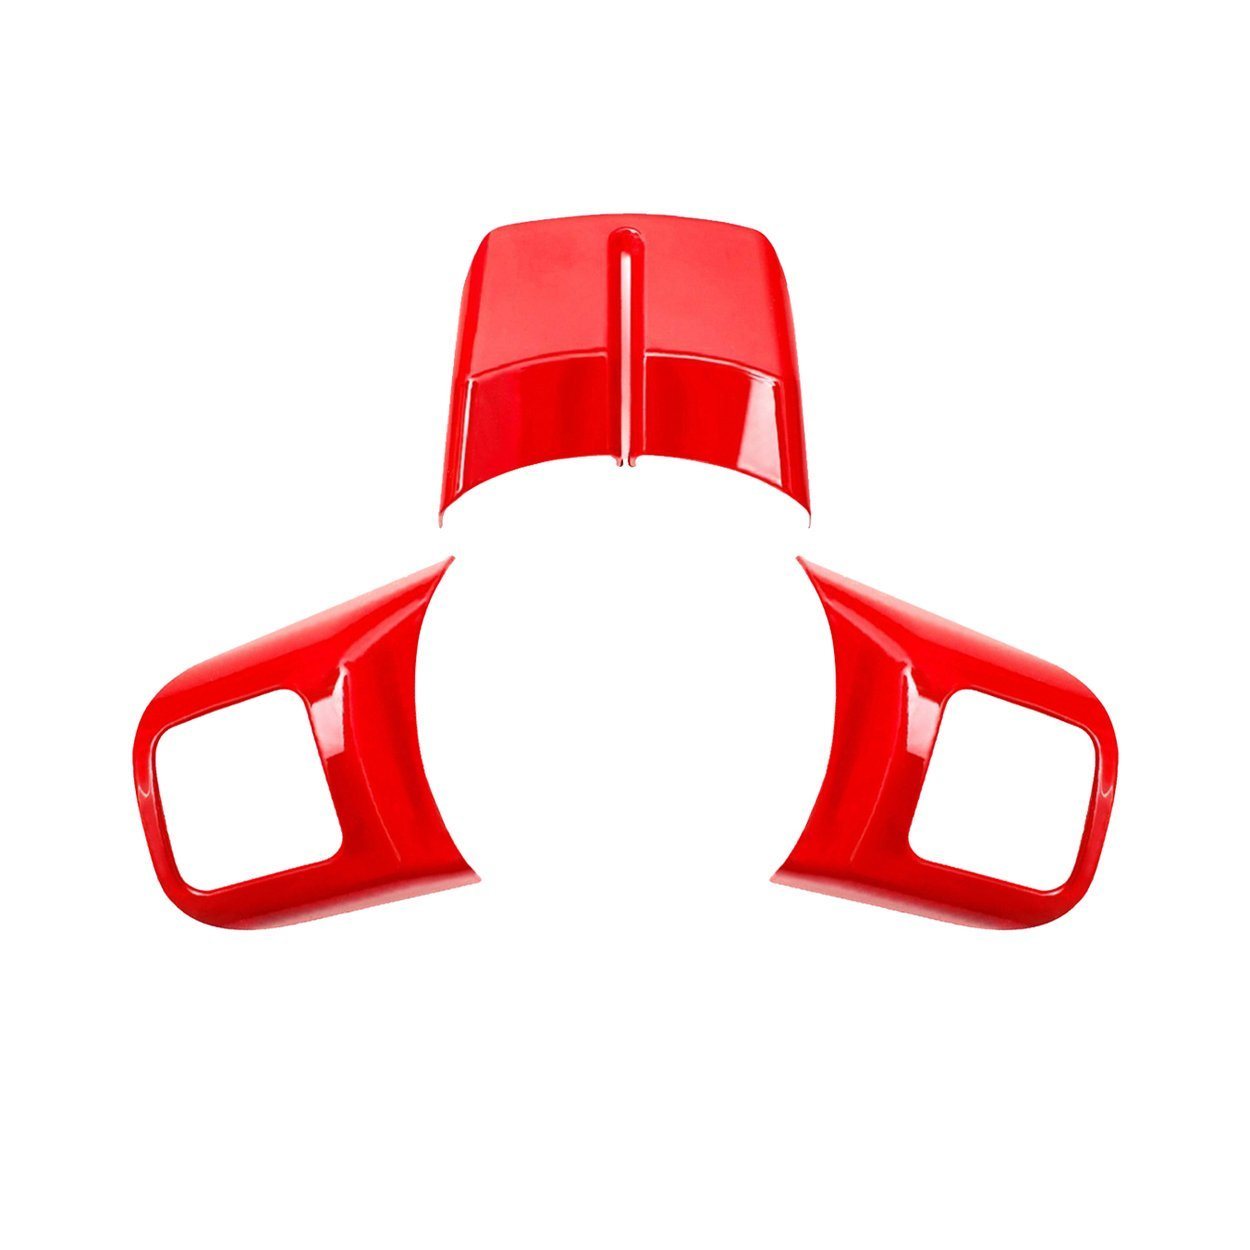 Jeep Wrangler Steering Wheel Red Interior Trim Kits